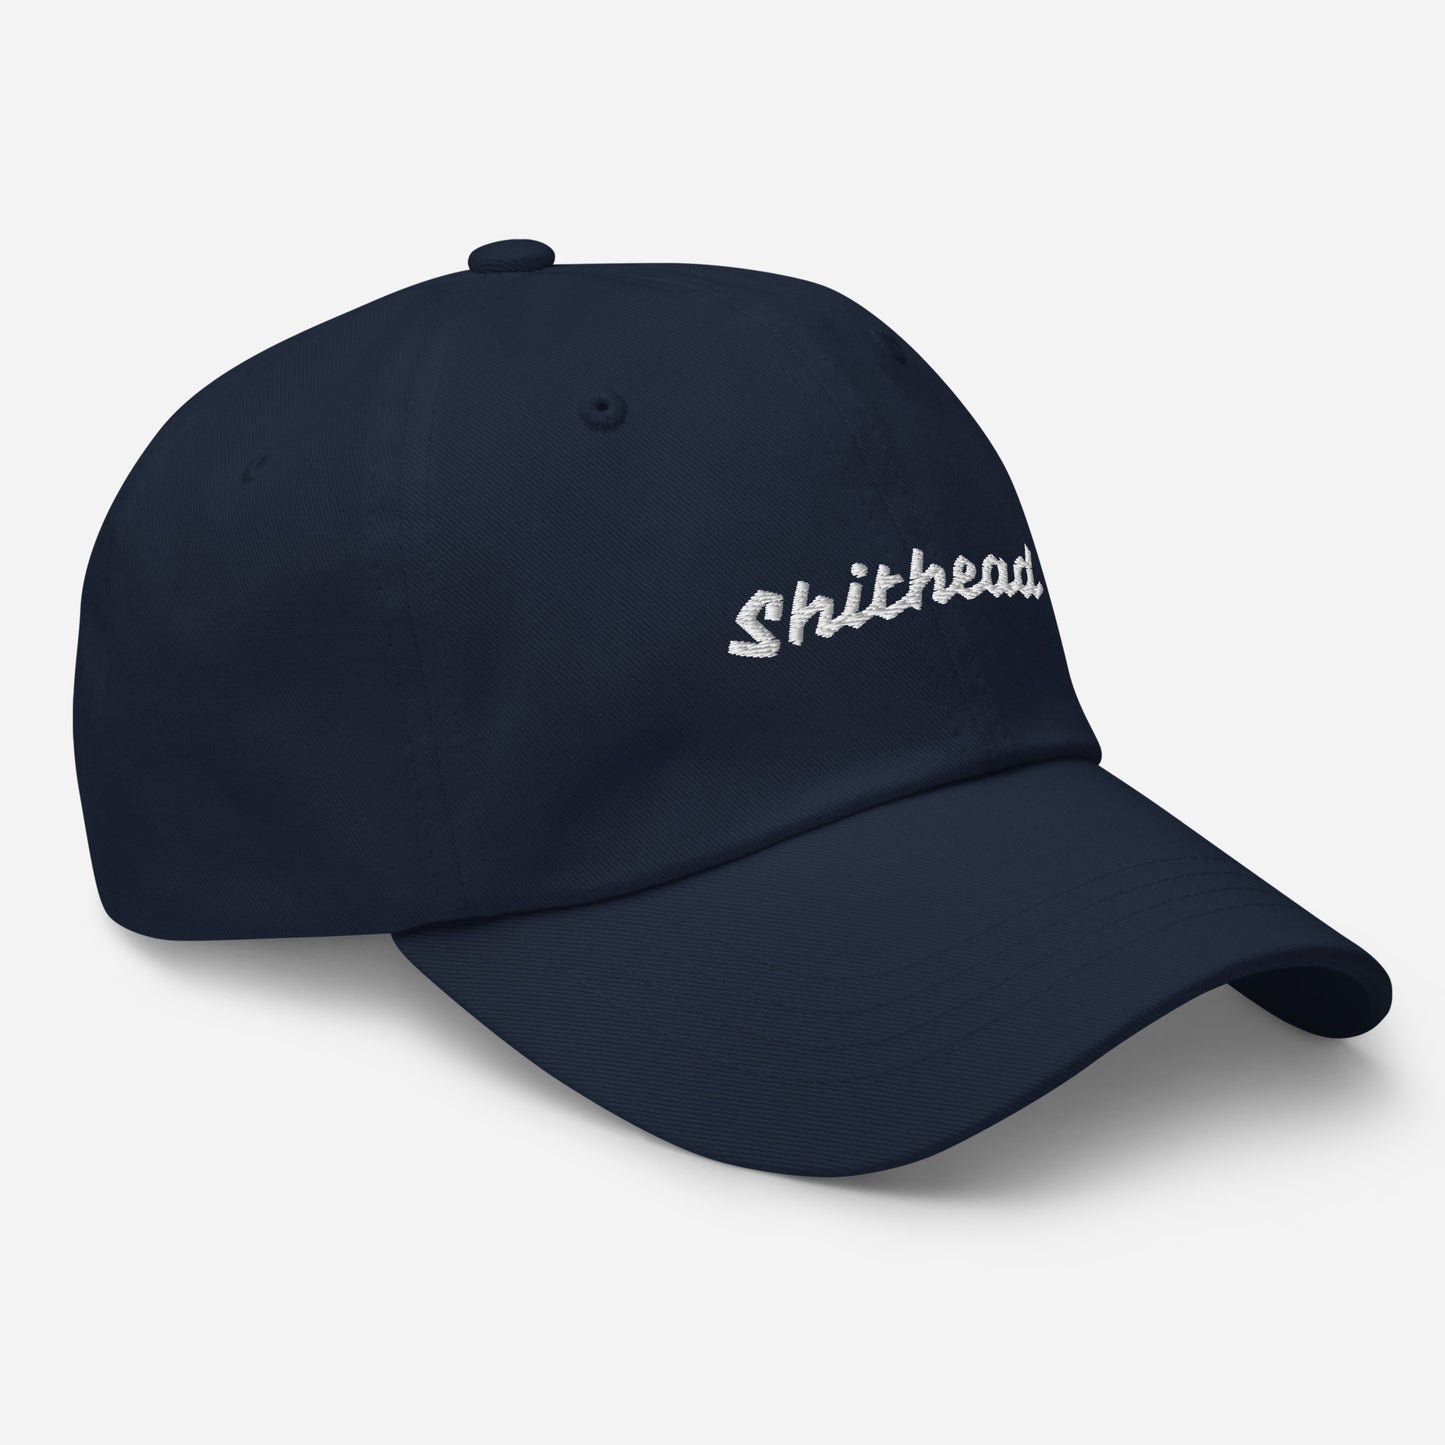 Shithead Dad hat